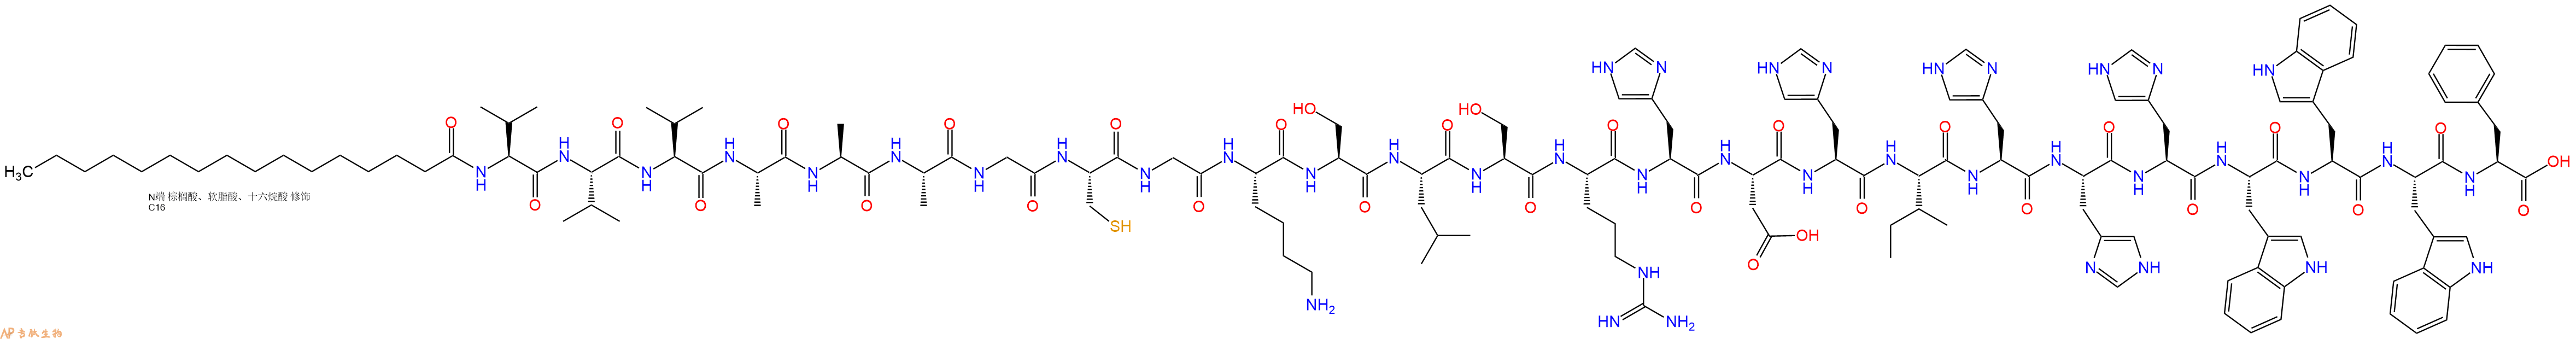 专肽生物产品棕榈酸-VVVAAAGCGKSLSRHDHIHHHWWWF